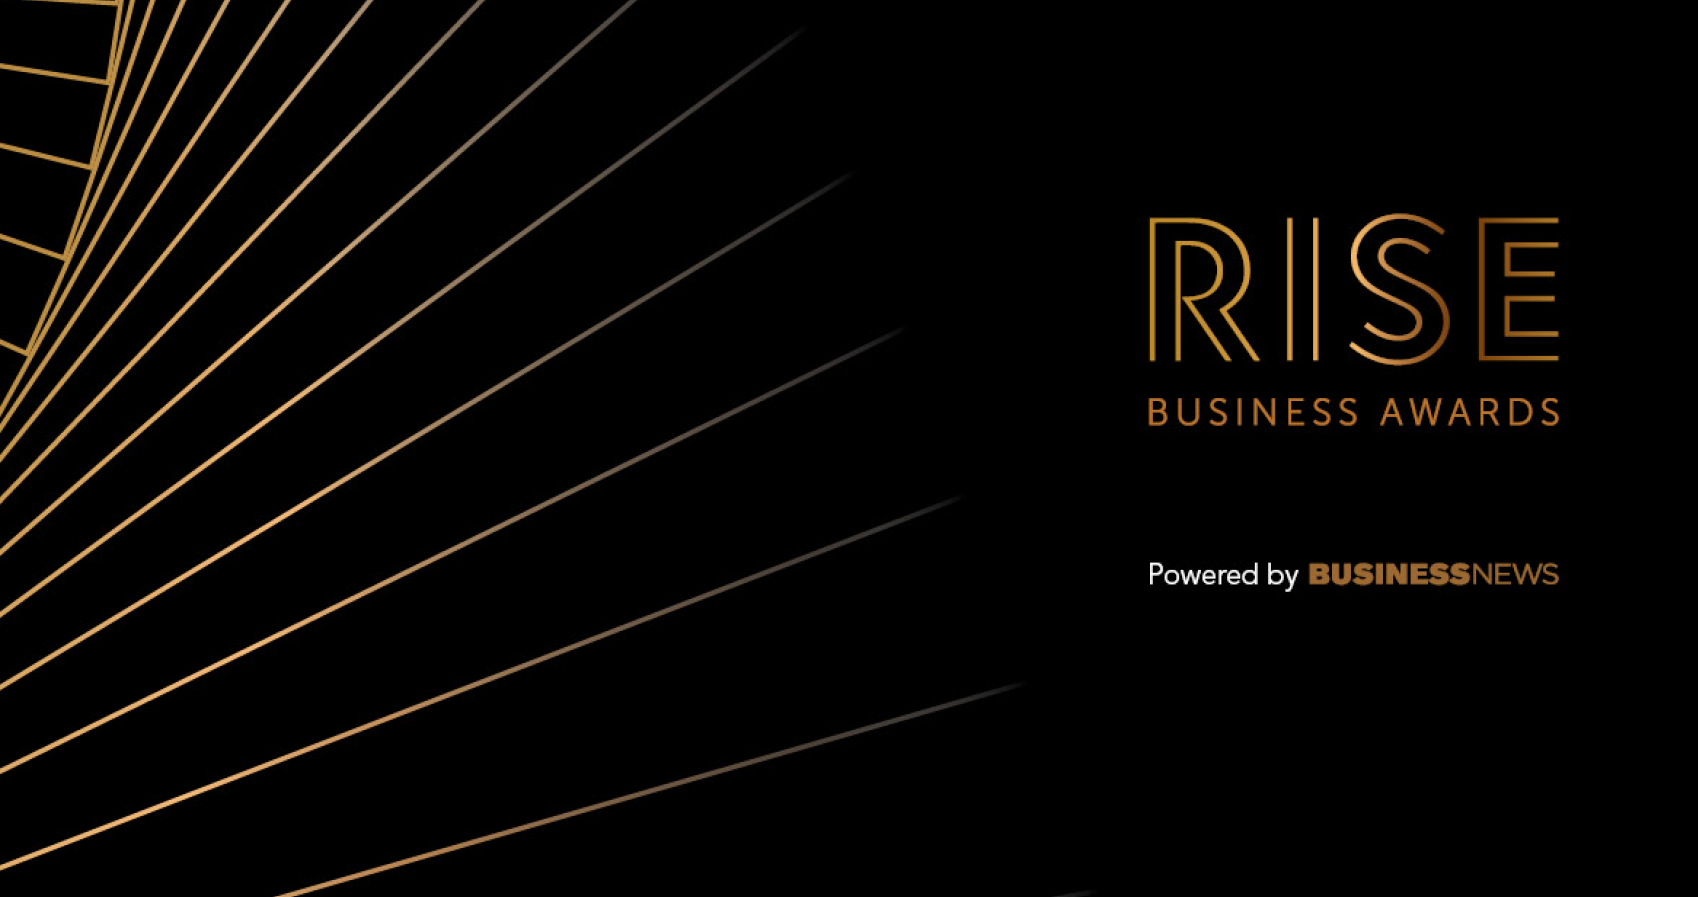 Business News awards logo